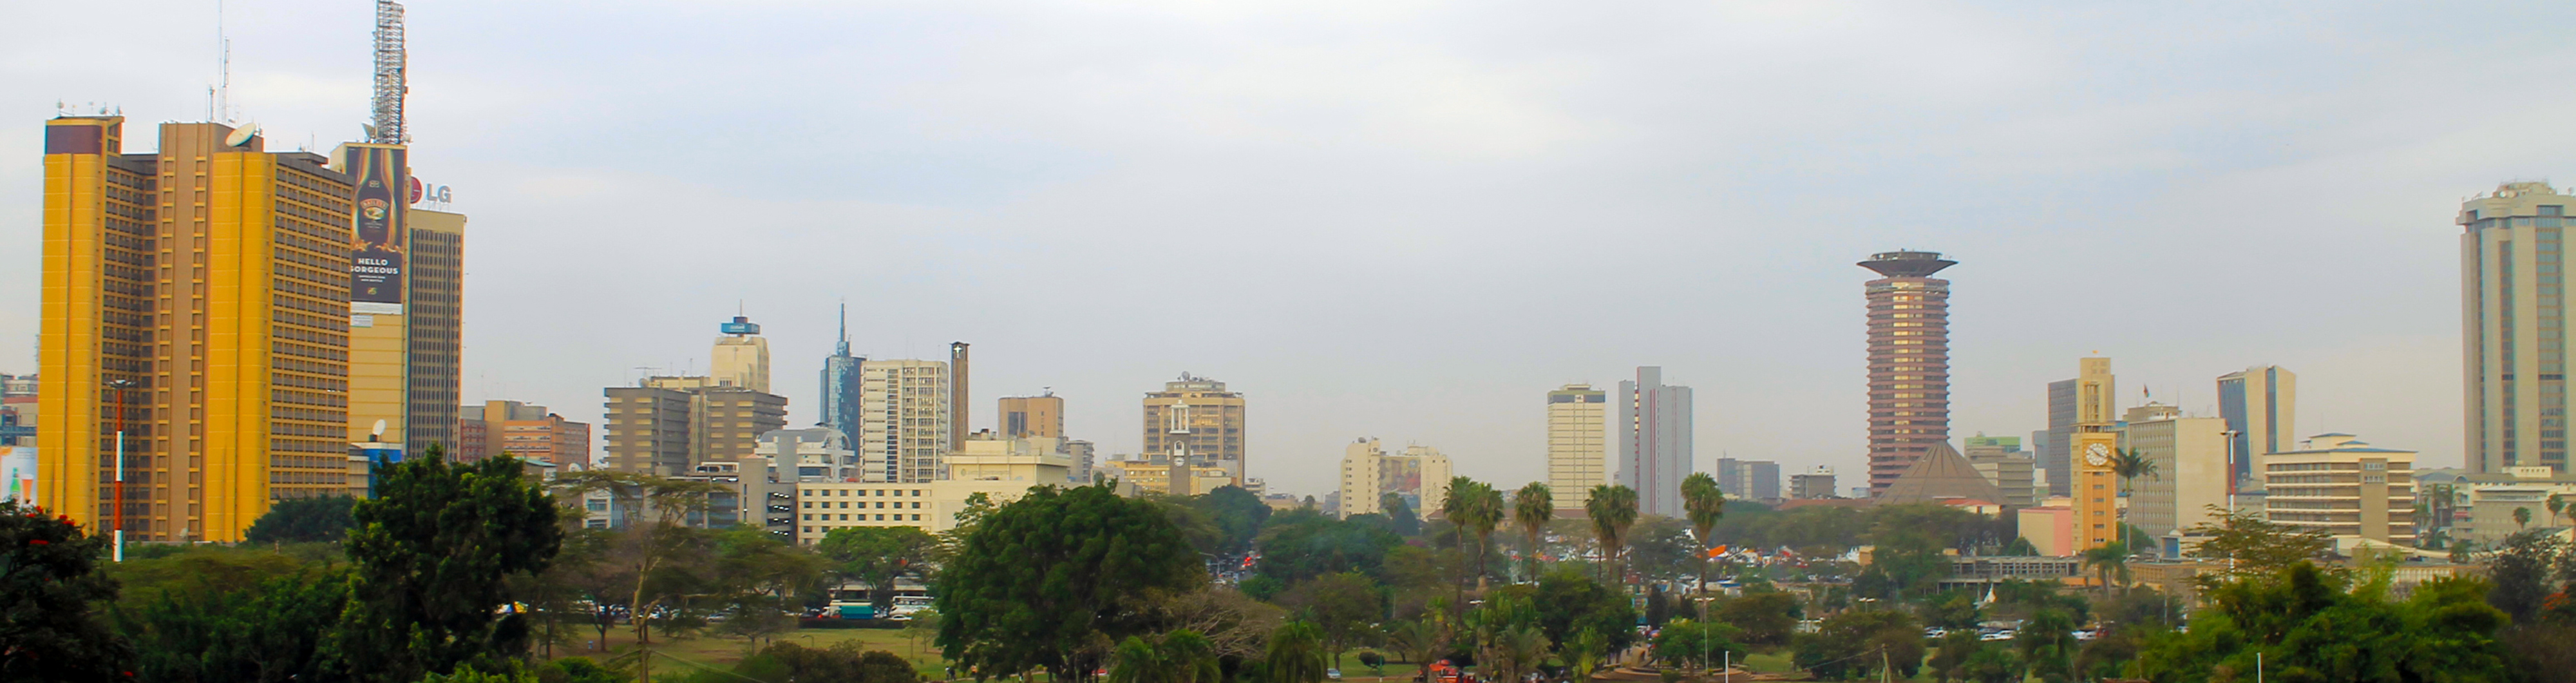 nairobi-skyline.jpg